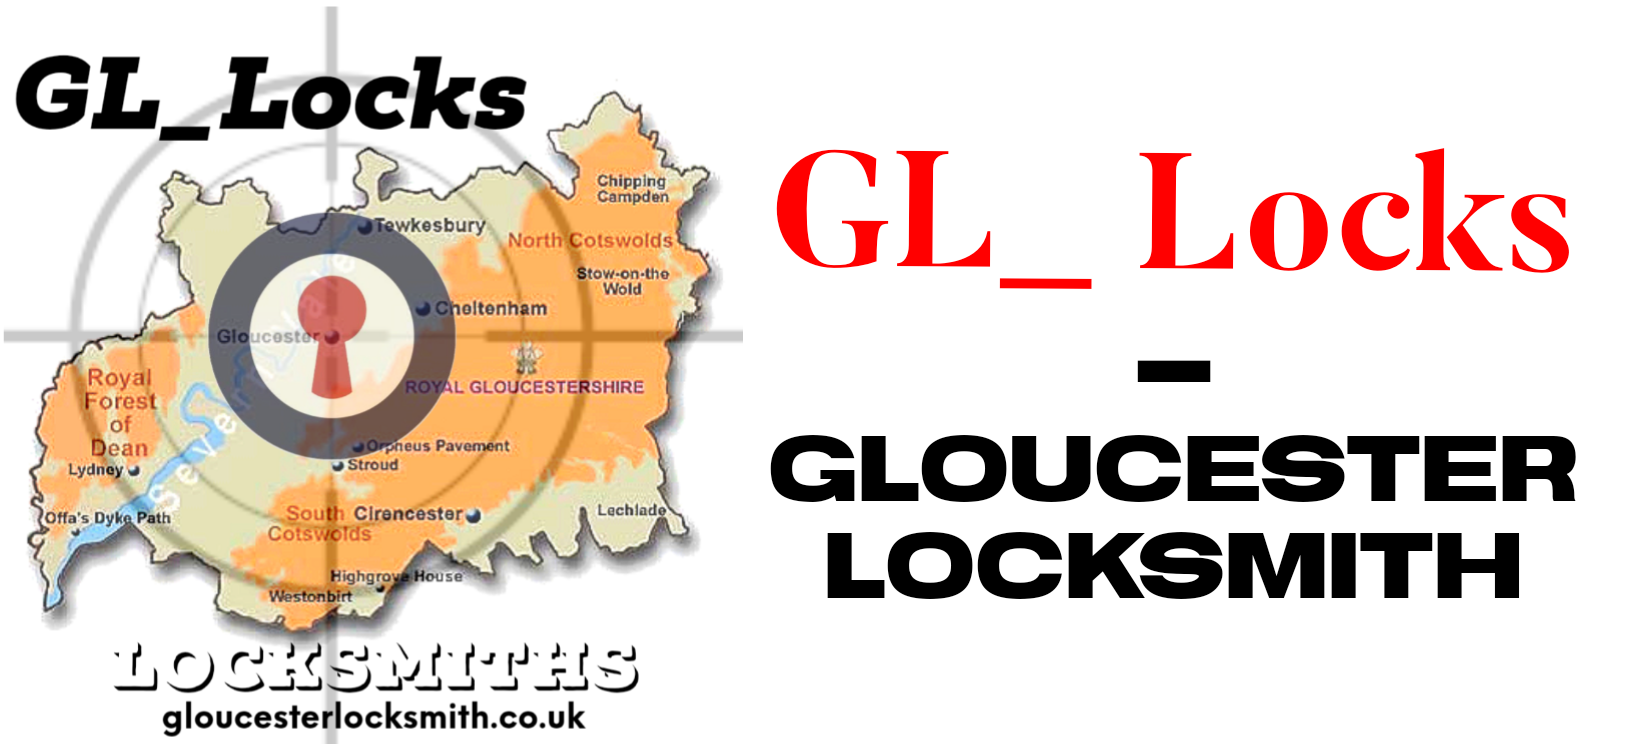 GL_Locks – Gloucester Locksmith